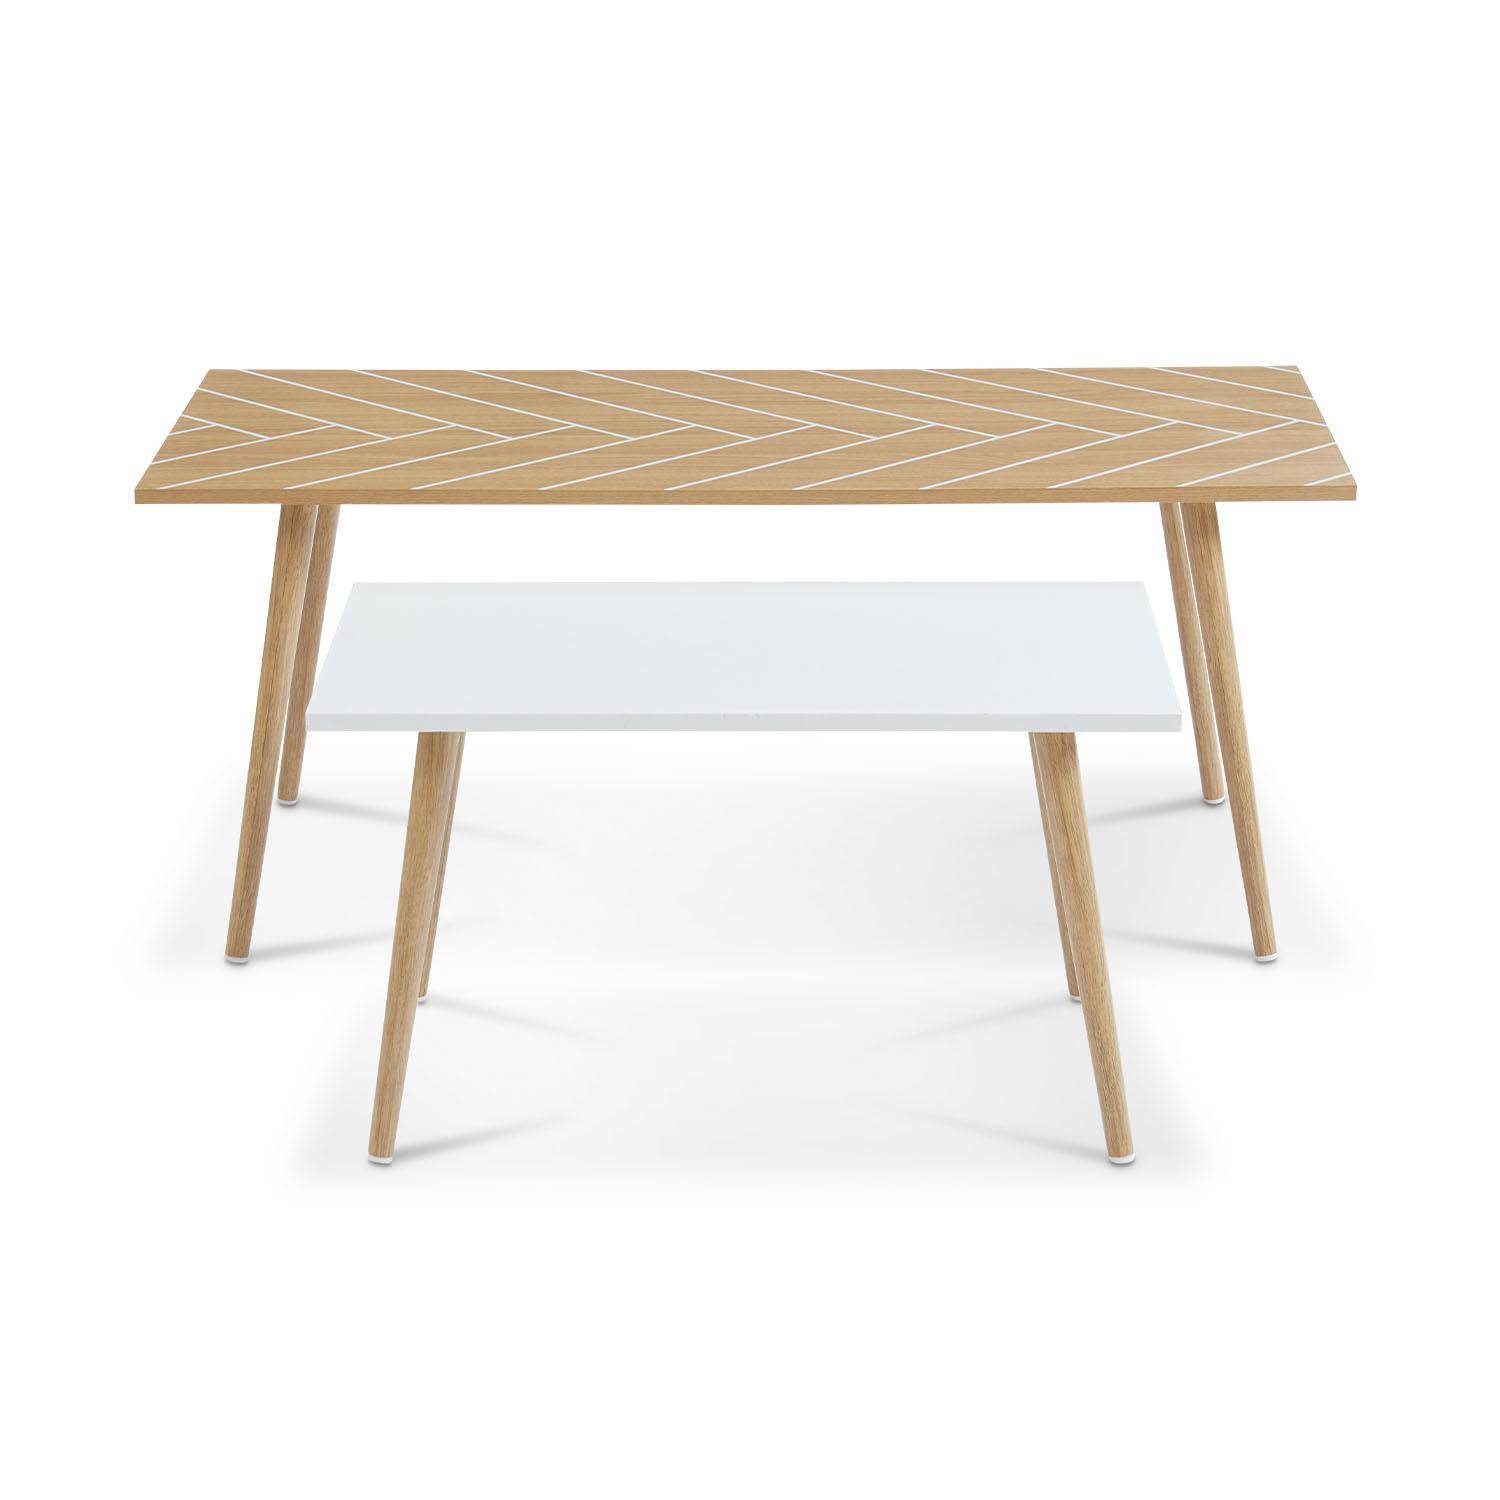 Conjunto de 2 mesas de centro natural y blanco - 110x50x45,5cm y 70x40x39cm - Etnik - base de madera maciza de eucalipto, diseño escandinavo,sweeek,Photo2